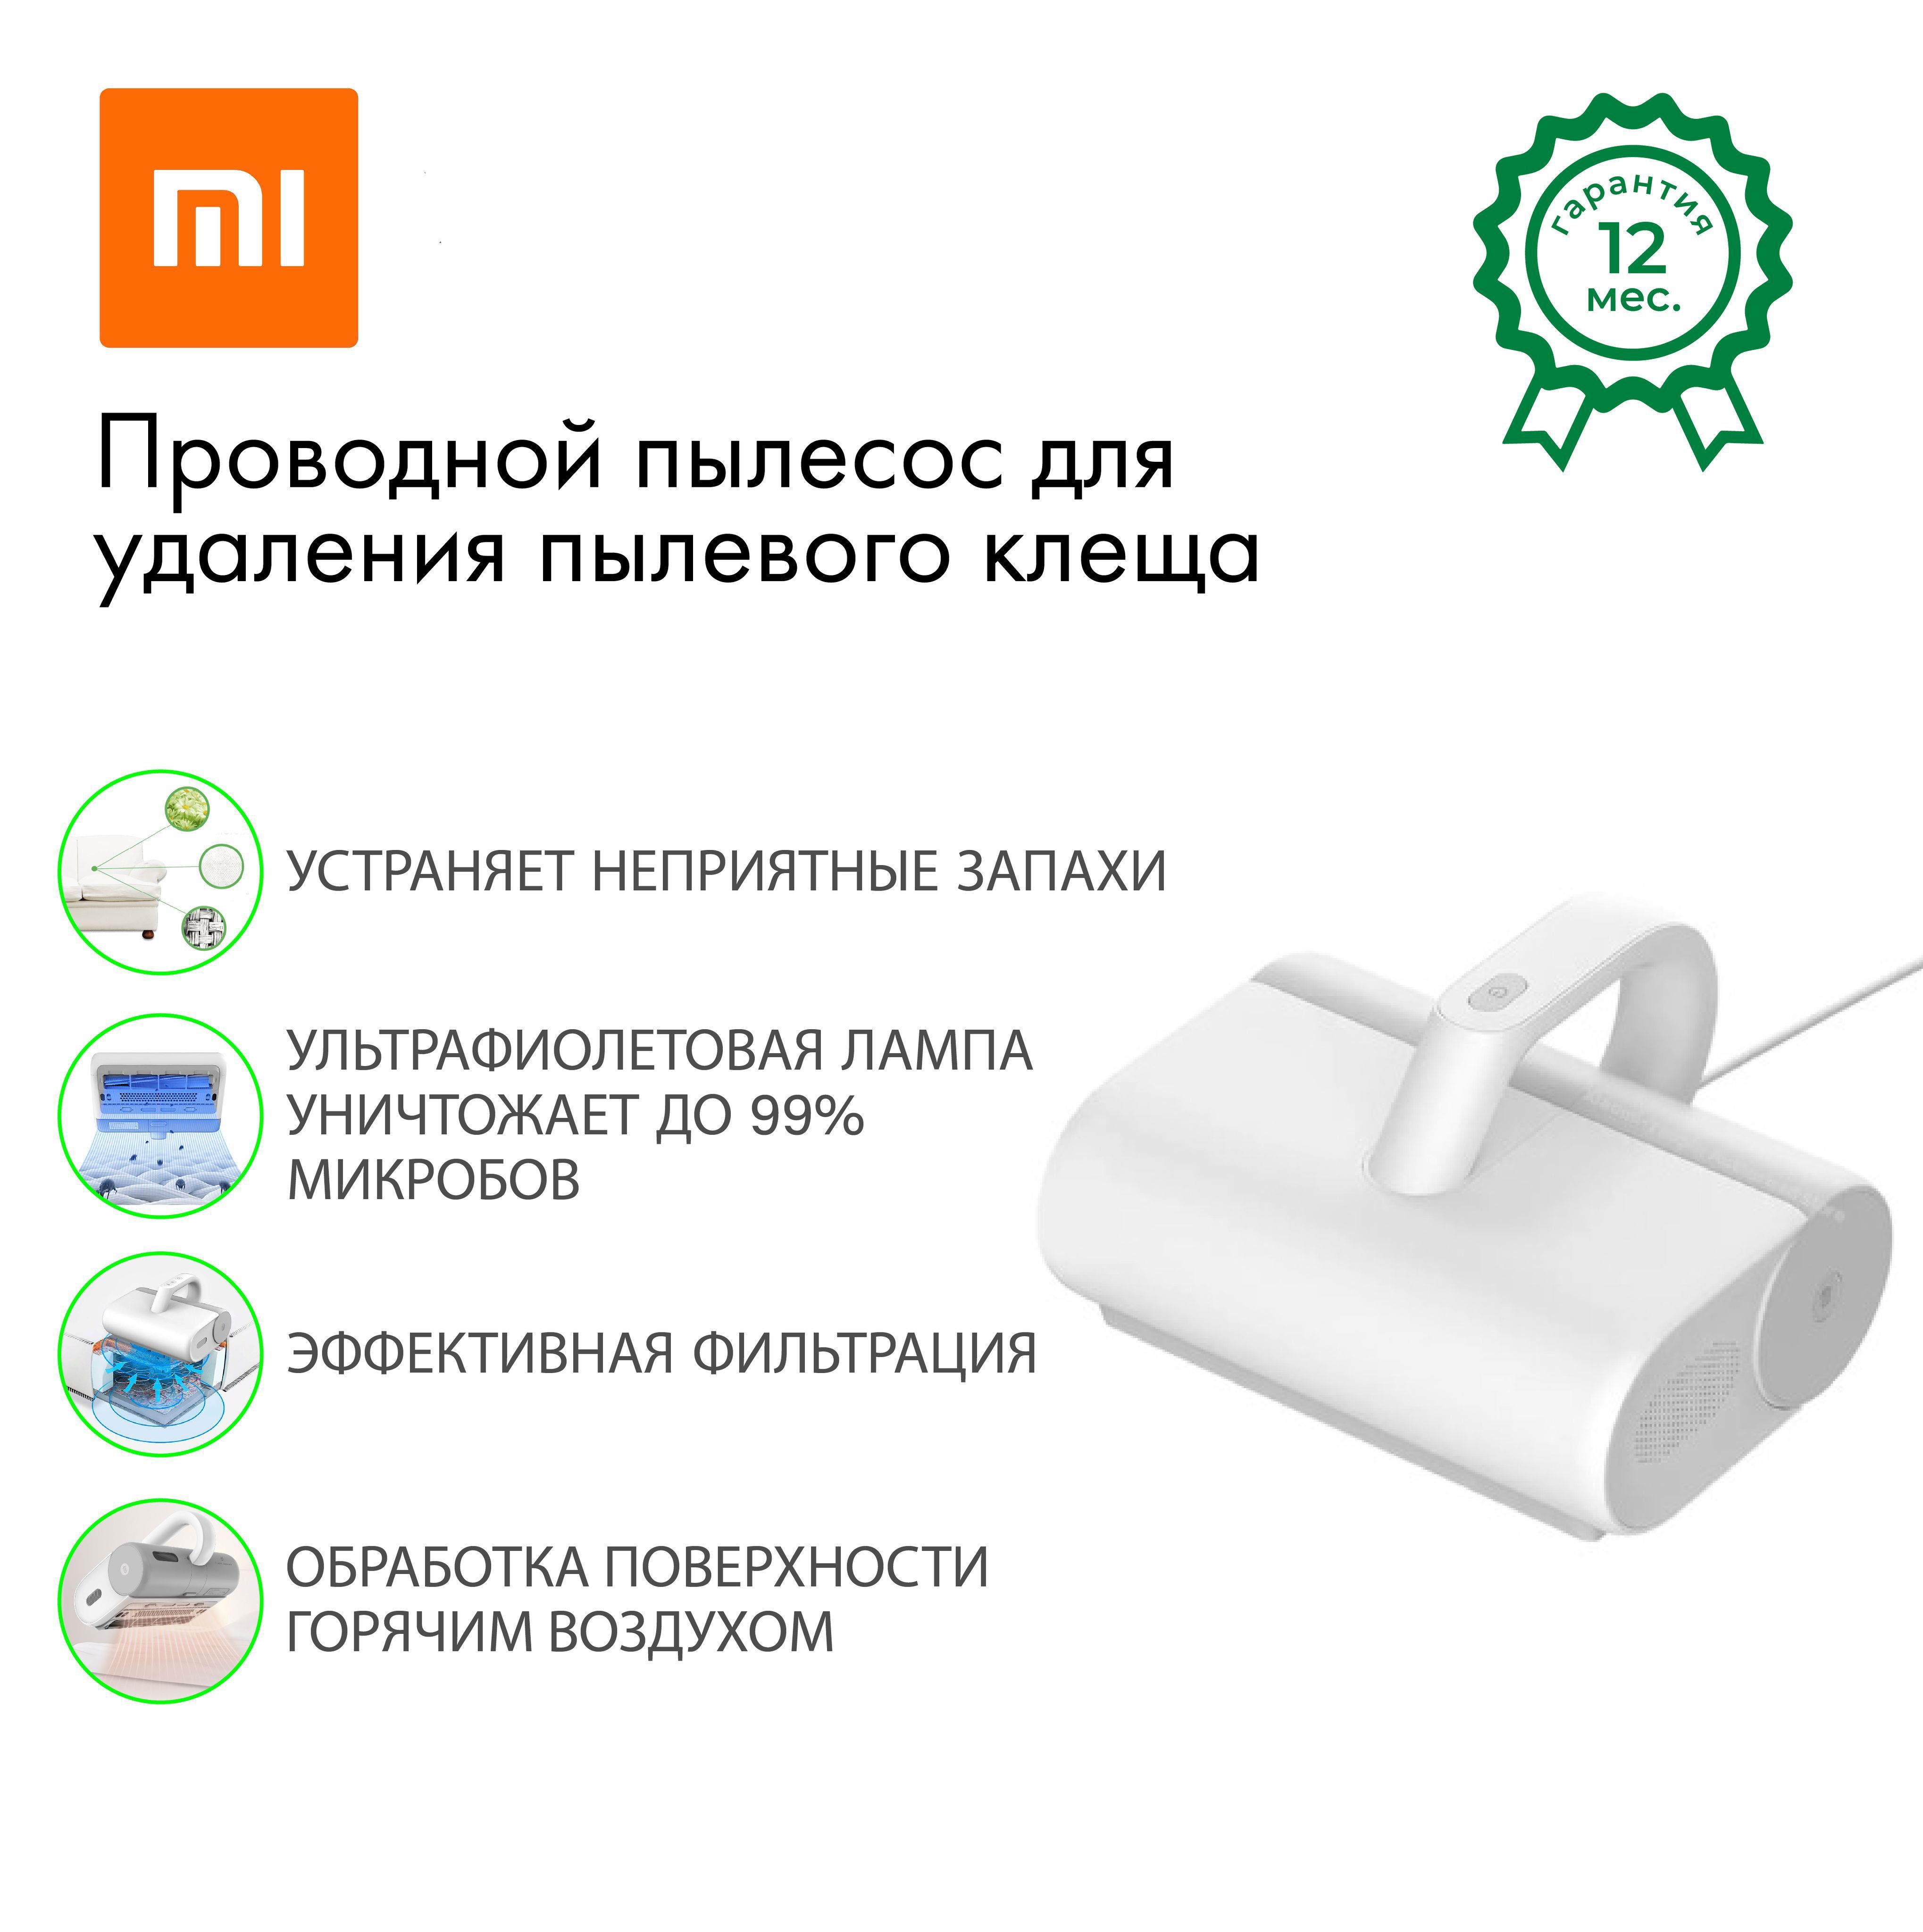 Mijia dust mite vacuum cleaner mjcmy01dy. Пылесос Xiaomi (mjcmy01dy). Xiaomi Dust Mite Vacuum. Xiaomi Dust Mite Vacuum вилка. Пылесос для удаления пылевого клеща.